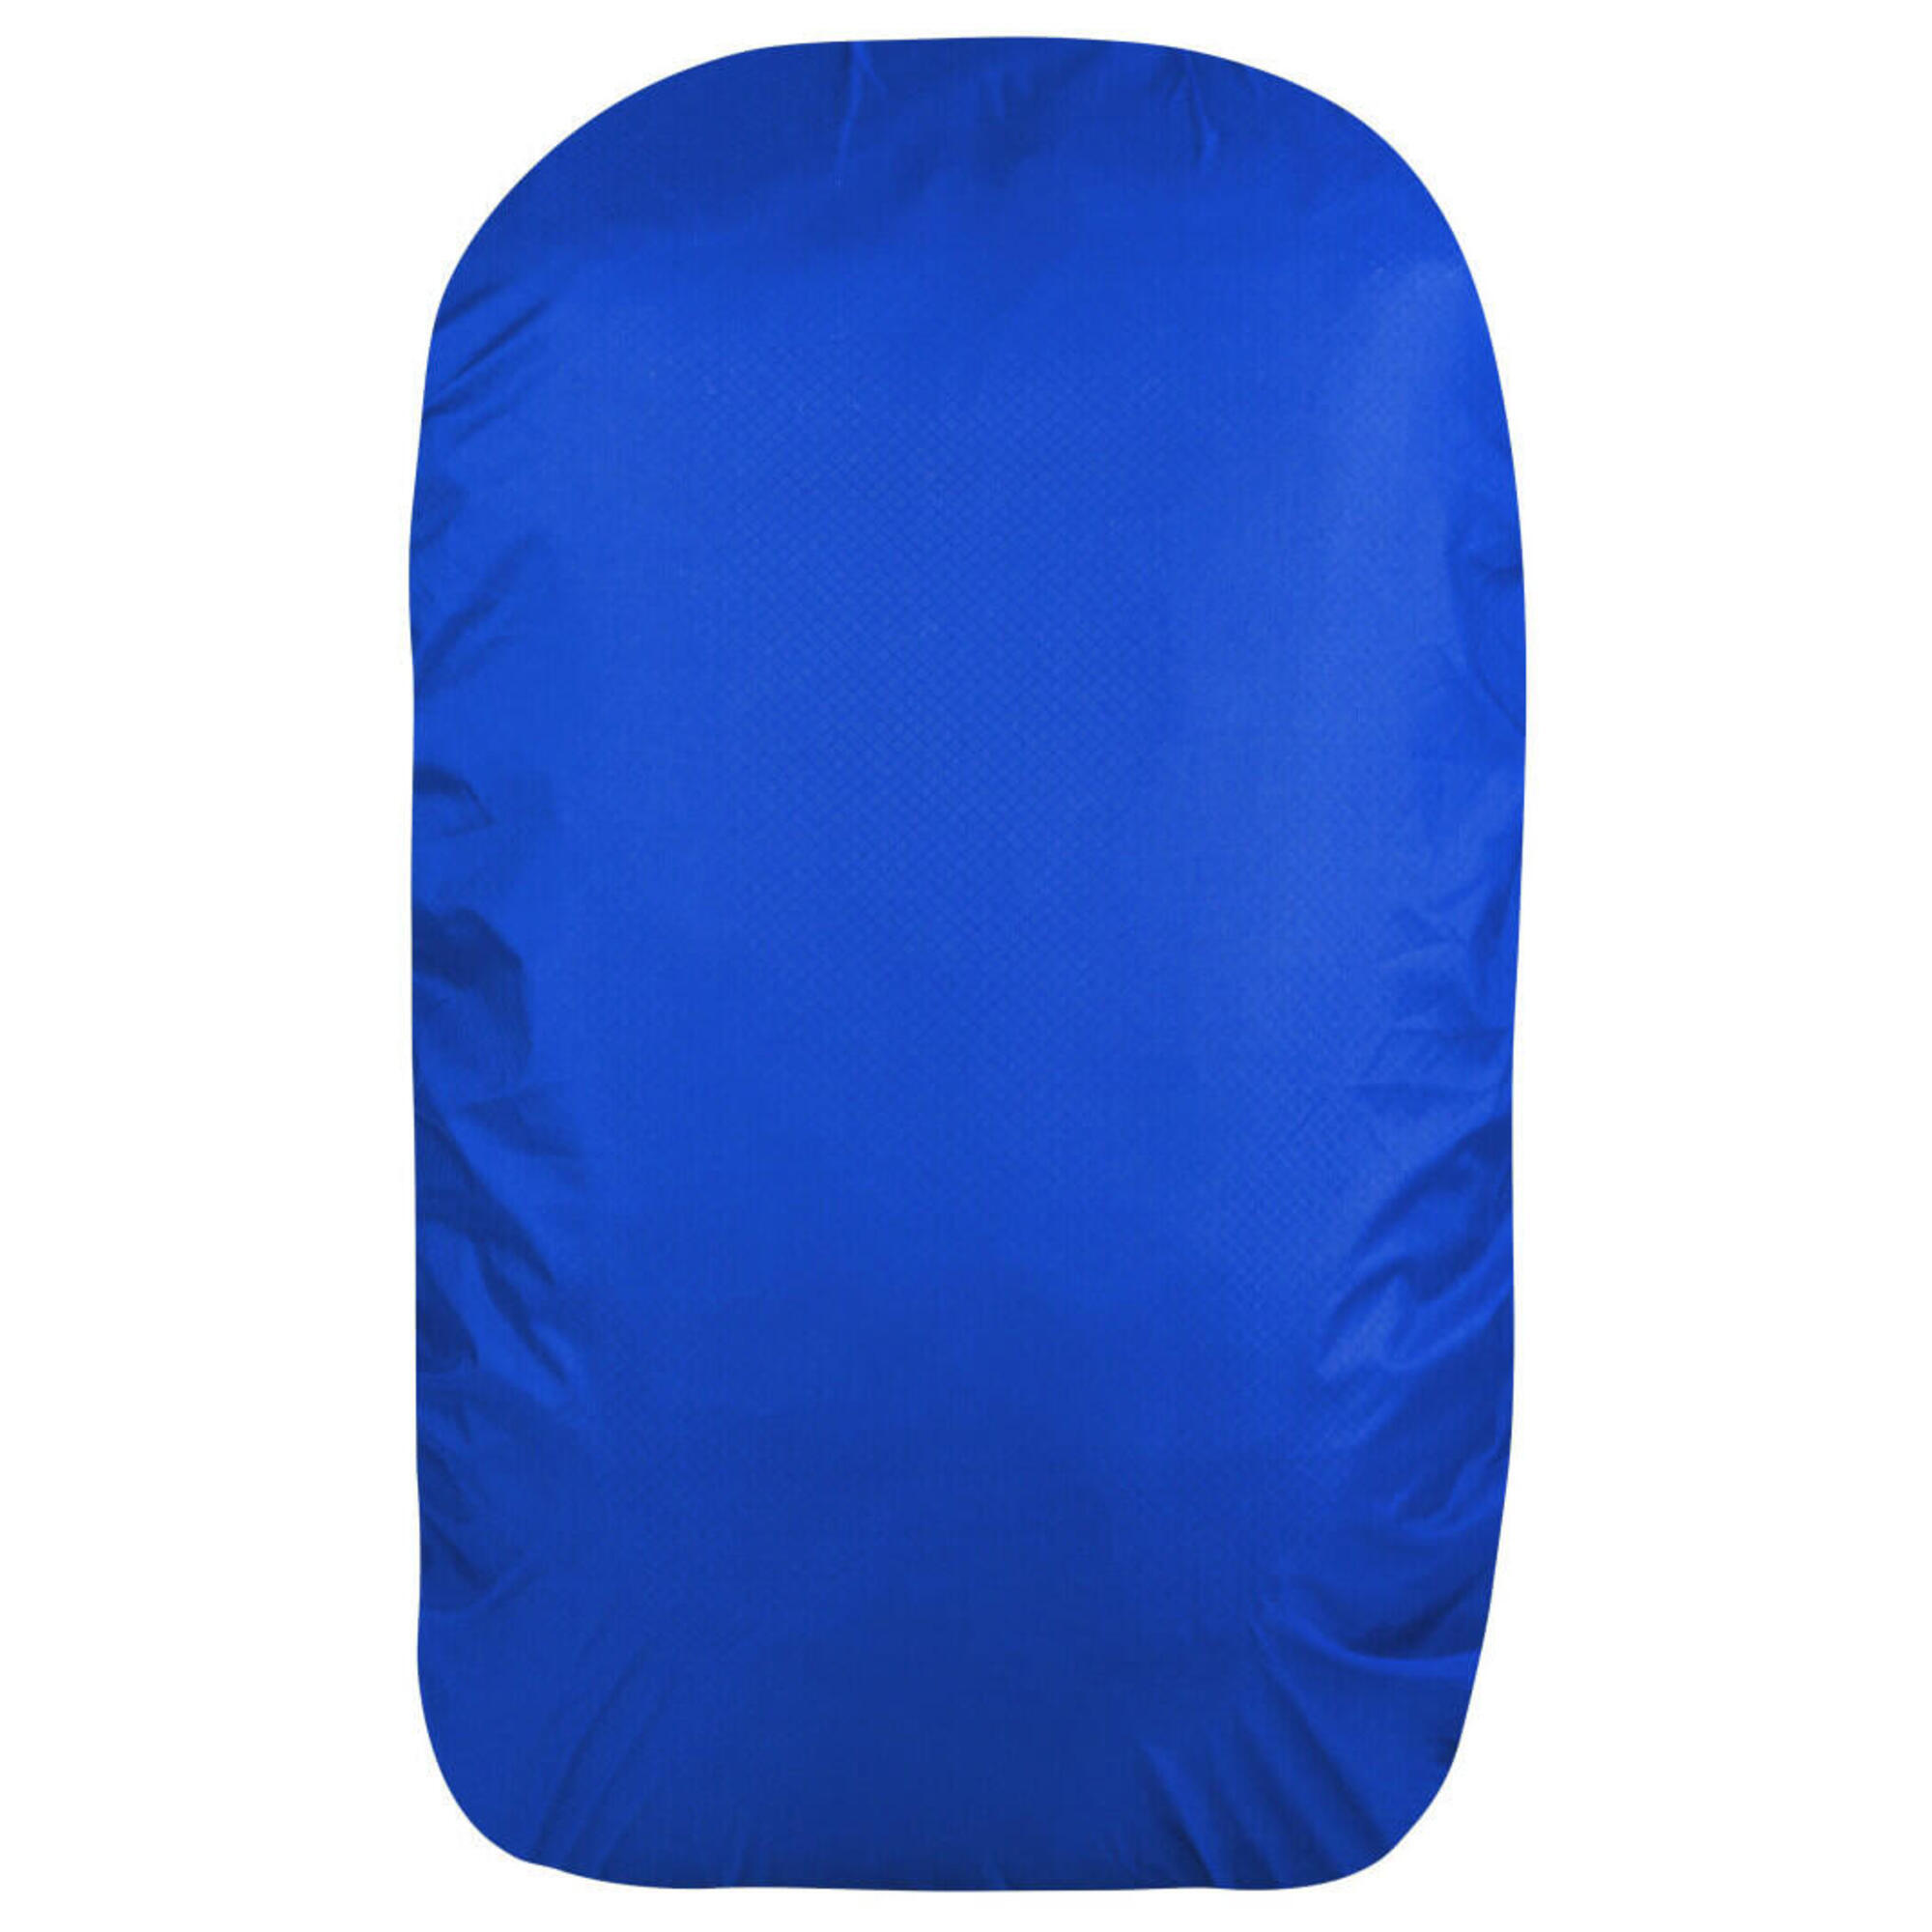 Osłona wodoodporna na plecak Sea To Summit Ultra-Sil Pack Cover